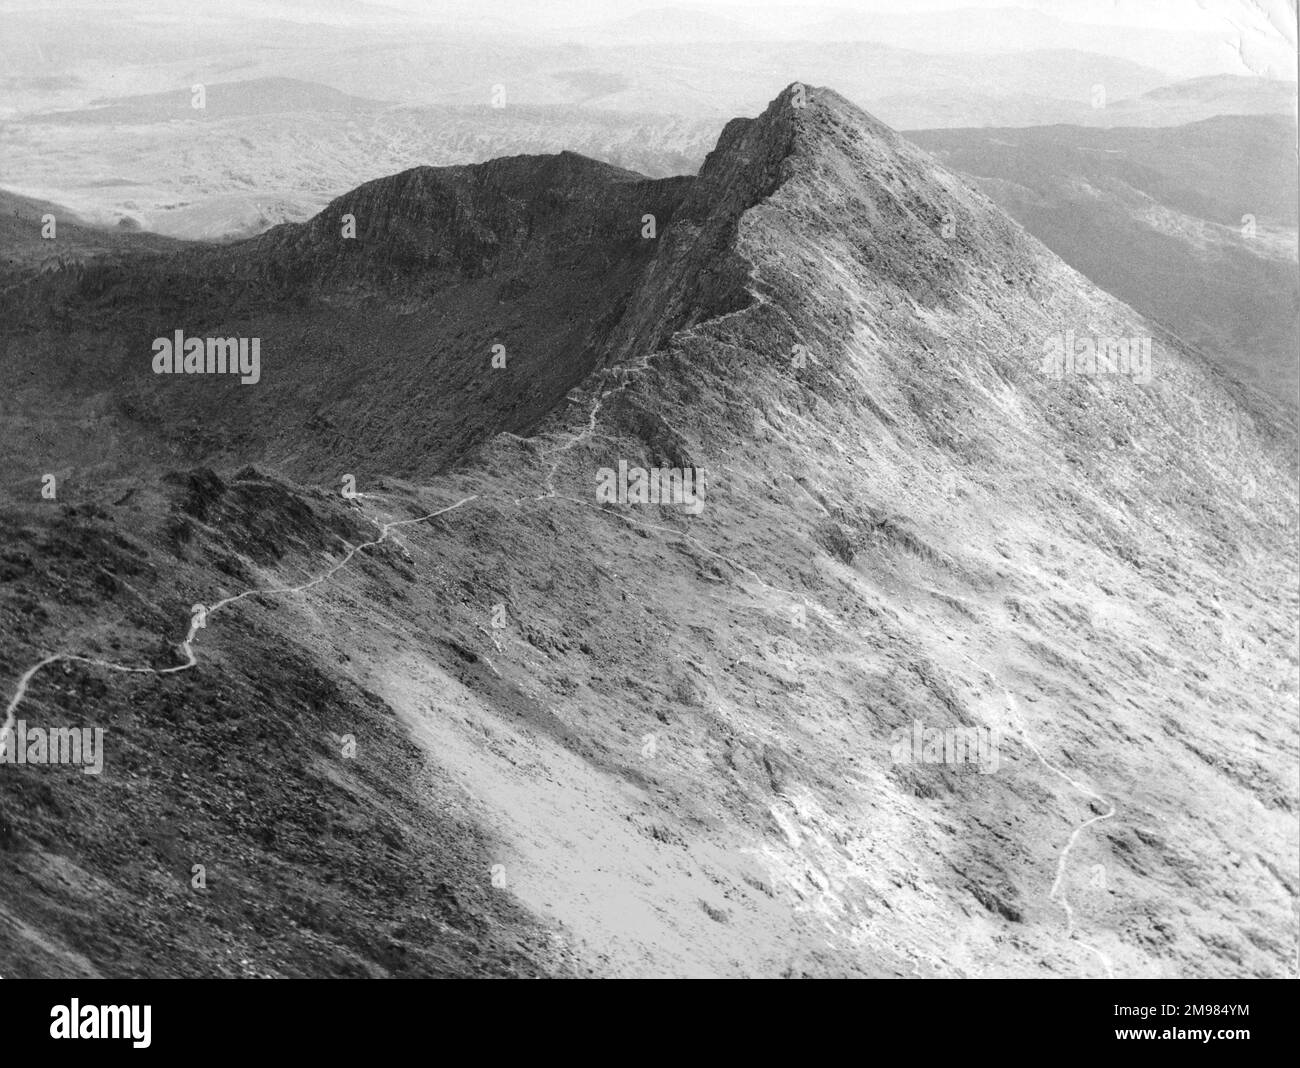 North Wales, Snowdonia - Mount Snowdon - footpath on the mountain. Stock Photo